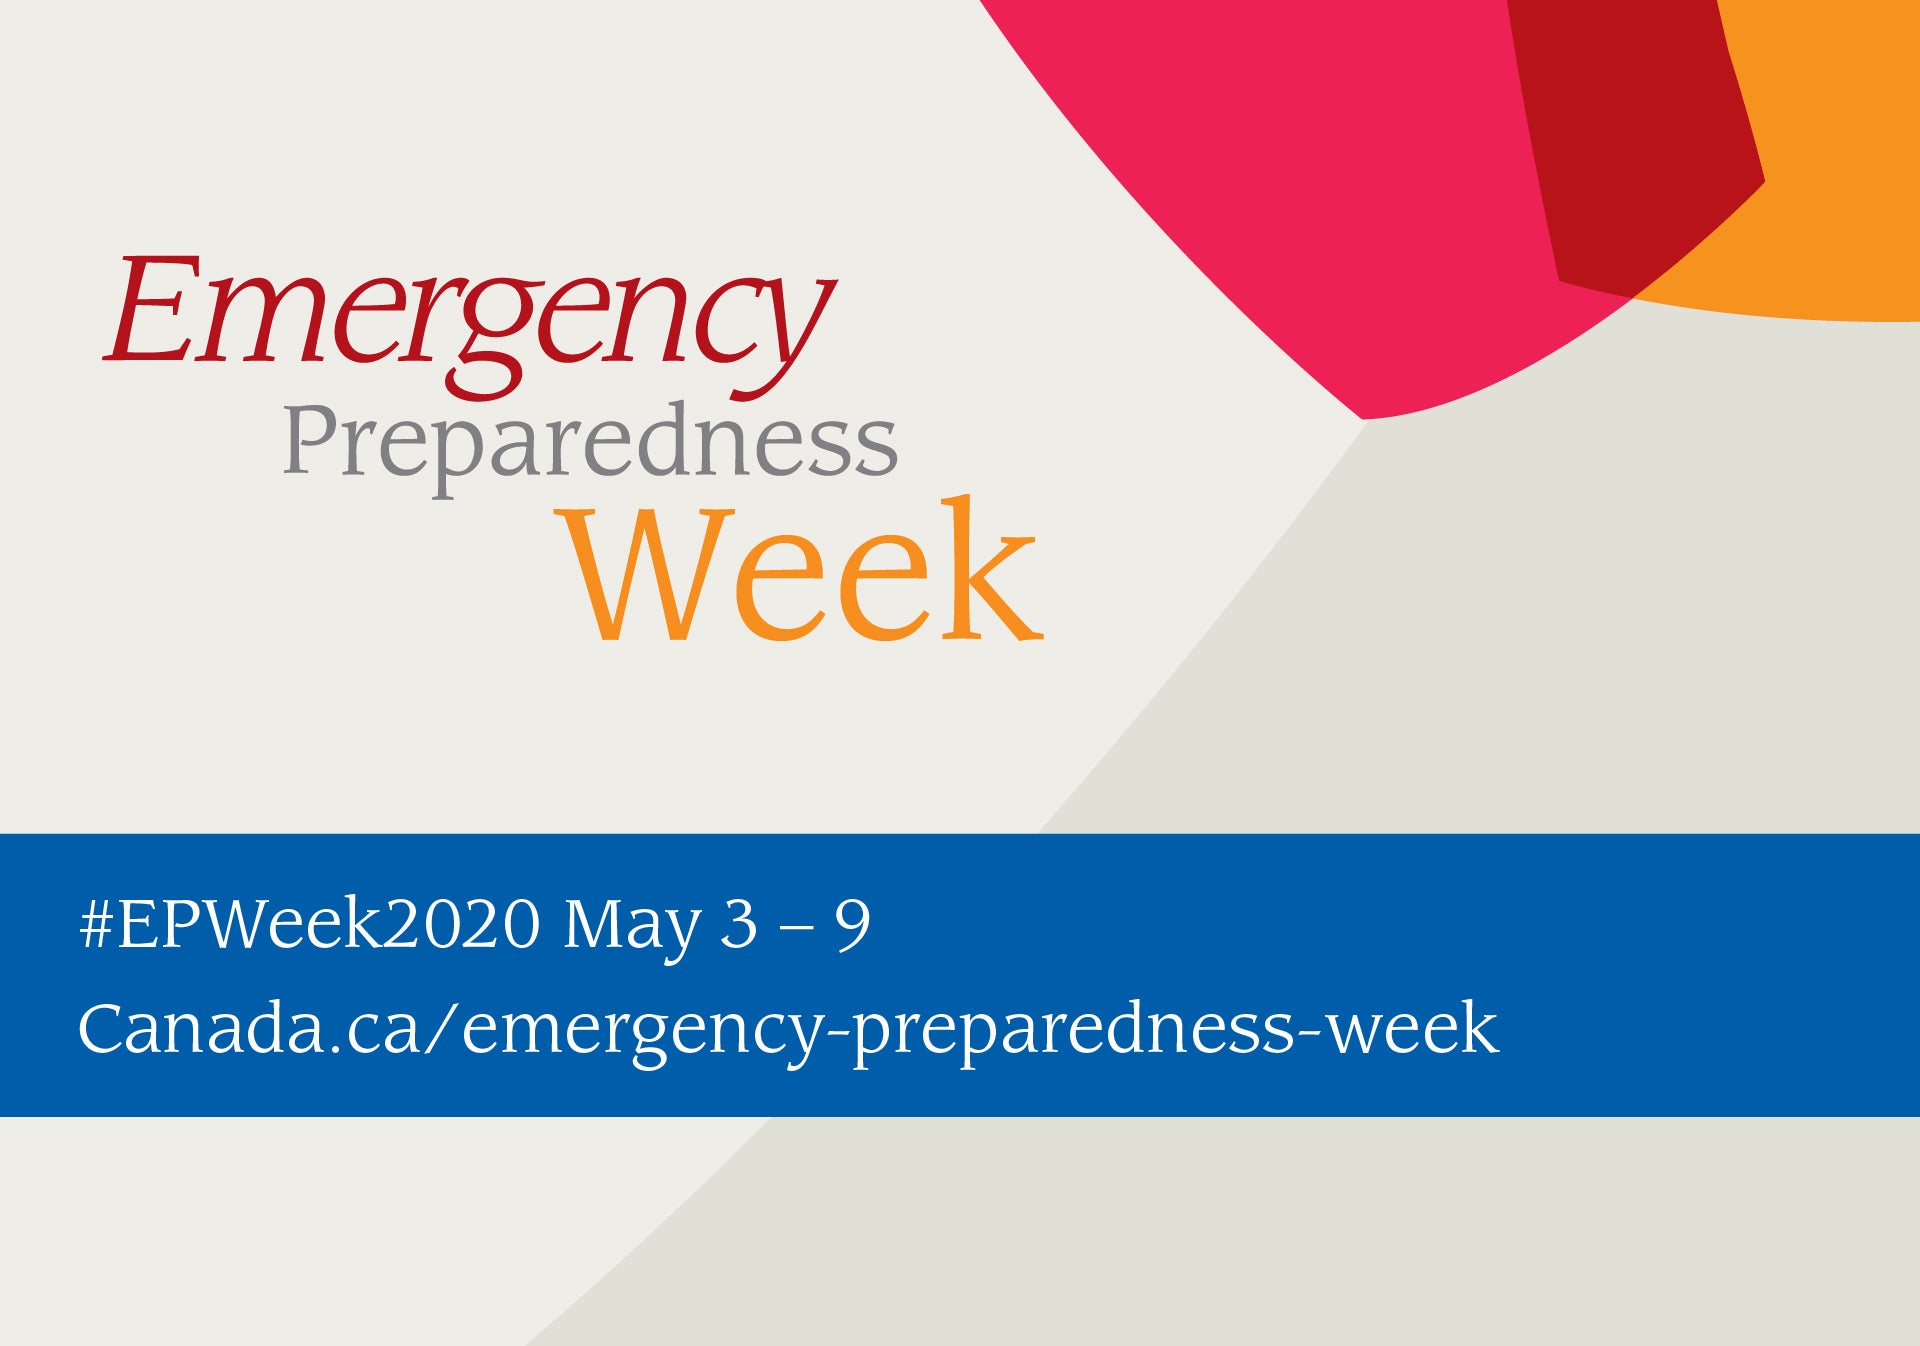 It’s Emergency Preparedness Week and Environment is helping inform